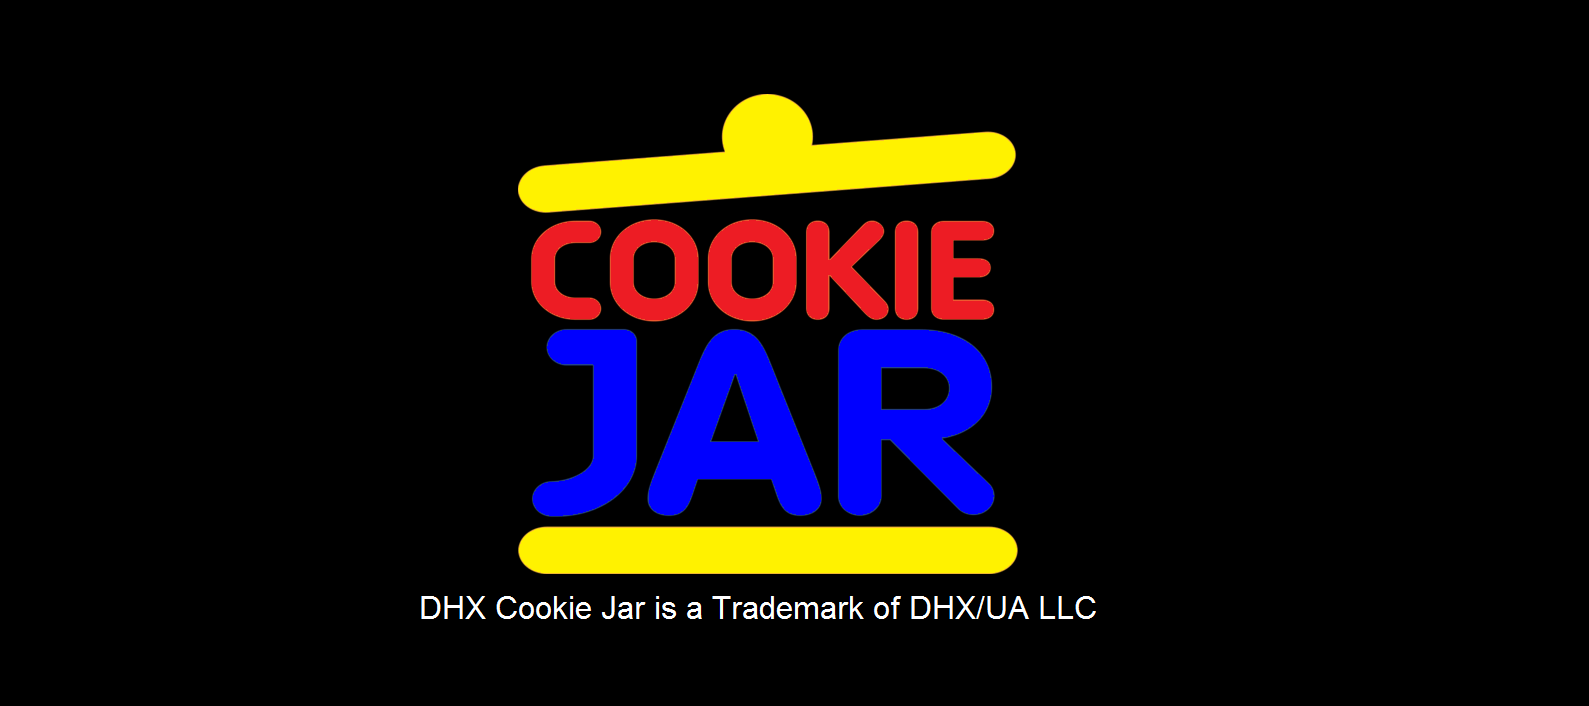 Cookie Jar Entertainment Logo - Cookie Jar Entertainment